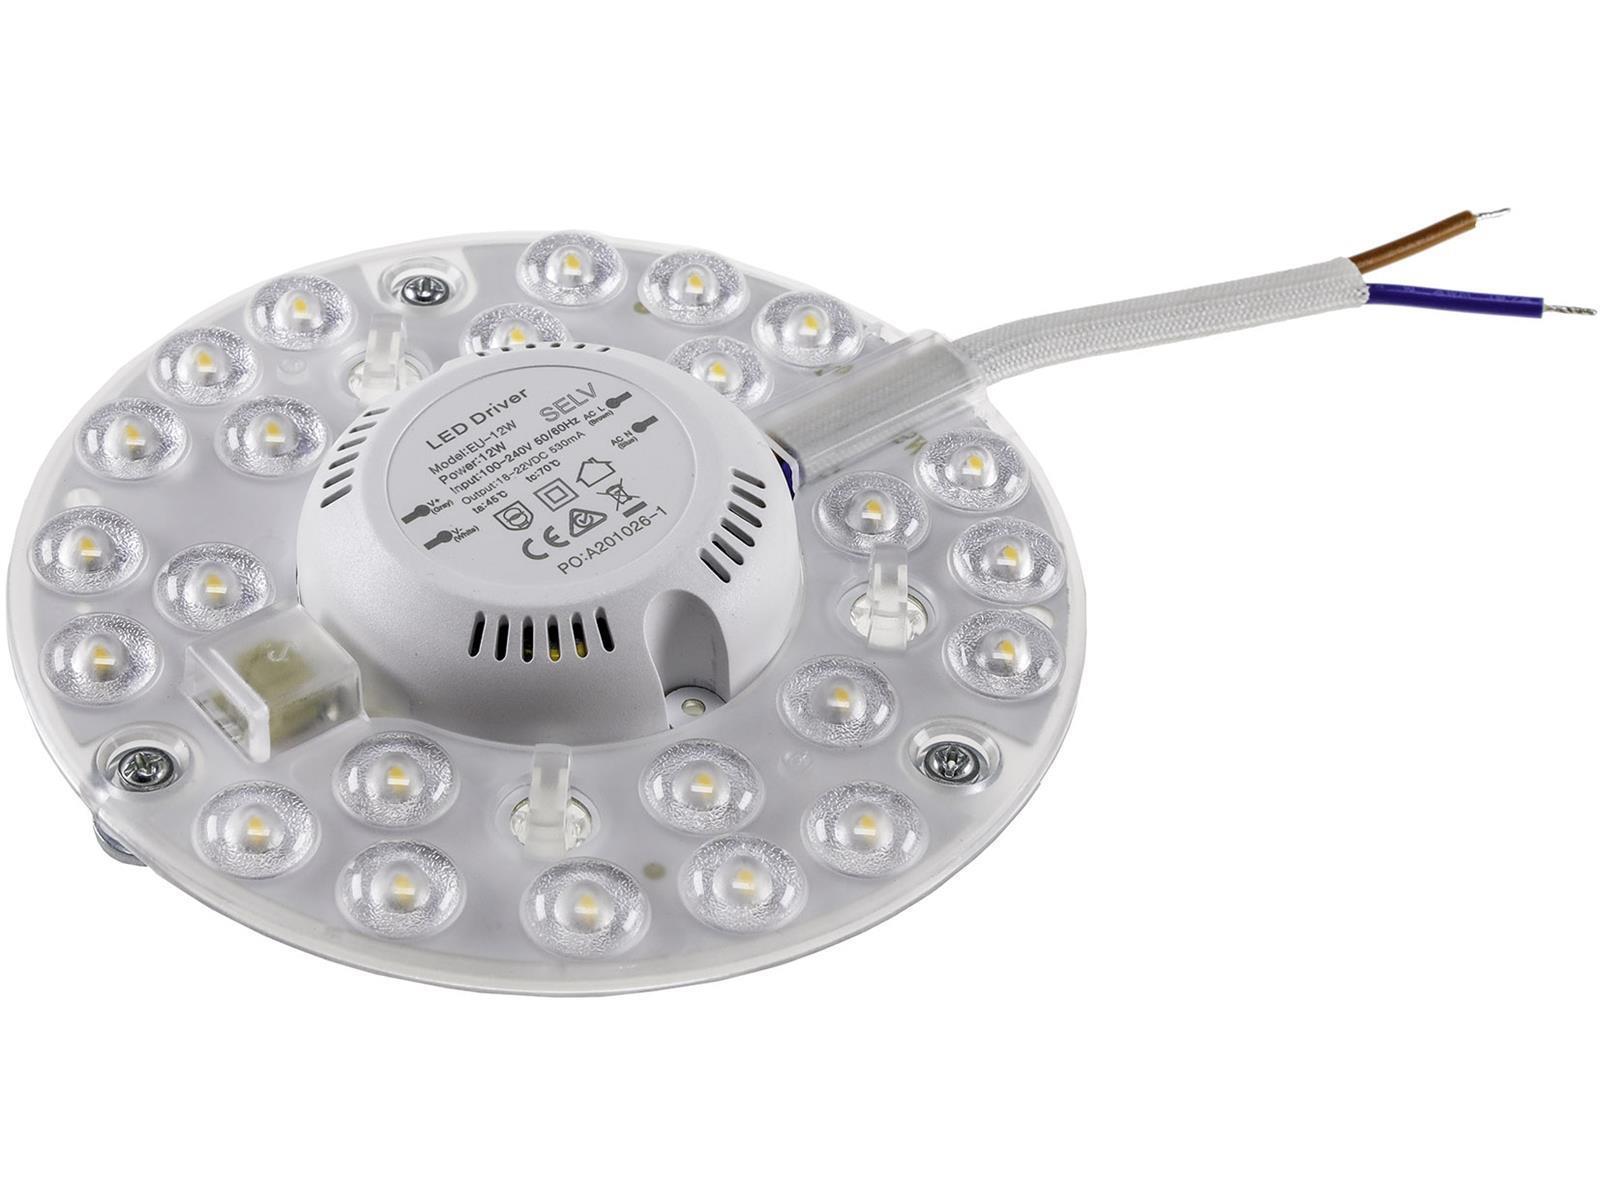 LED Umrüstmodul "UM12ww" für LeuchtenØ125mm, 12W, 1200lm, 3000K, Magnethalter